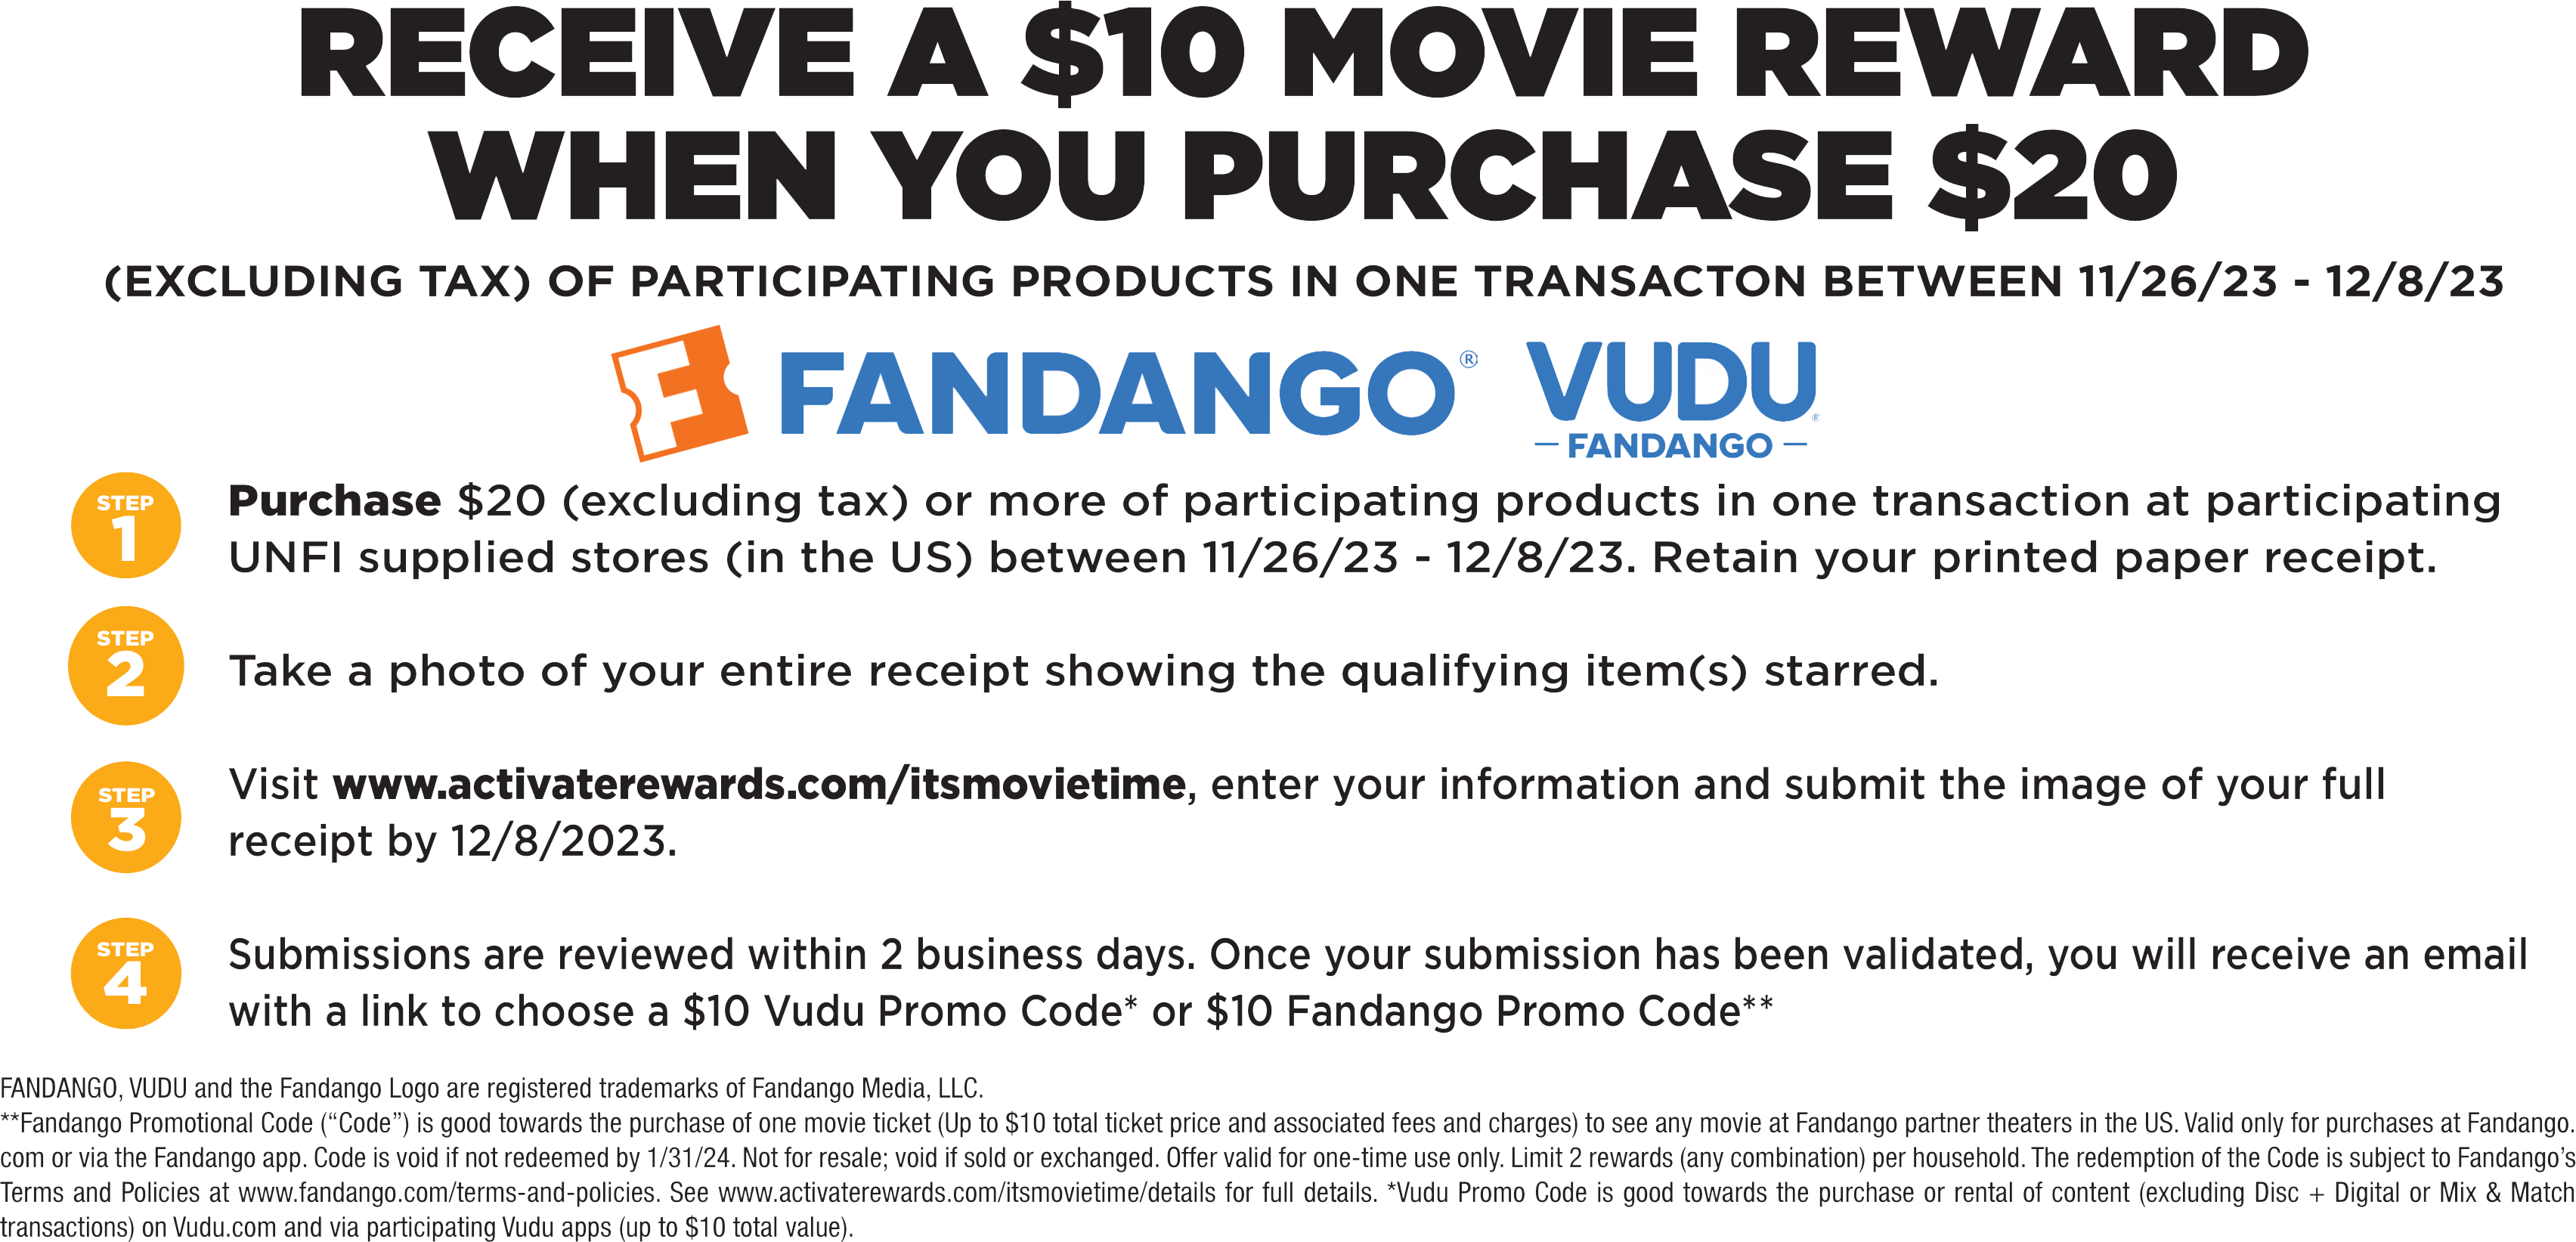 Receive a $10 movie reward when you purchase $20 - Fandango - Vudu